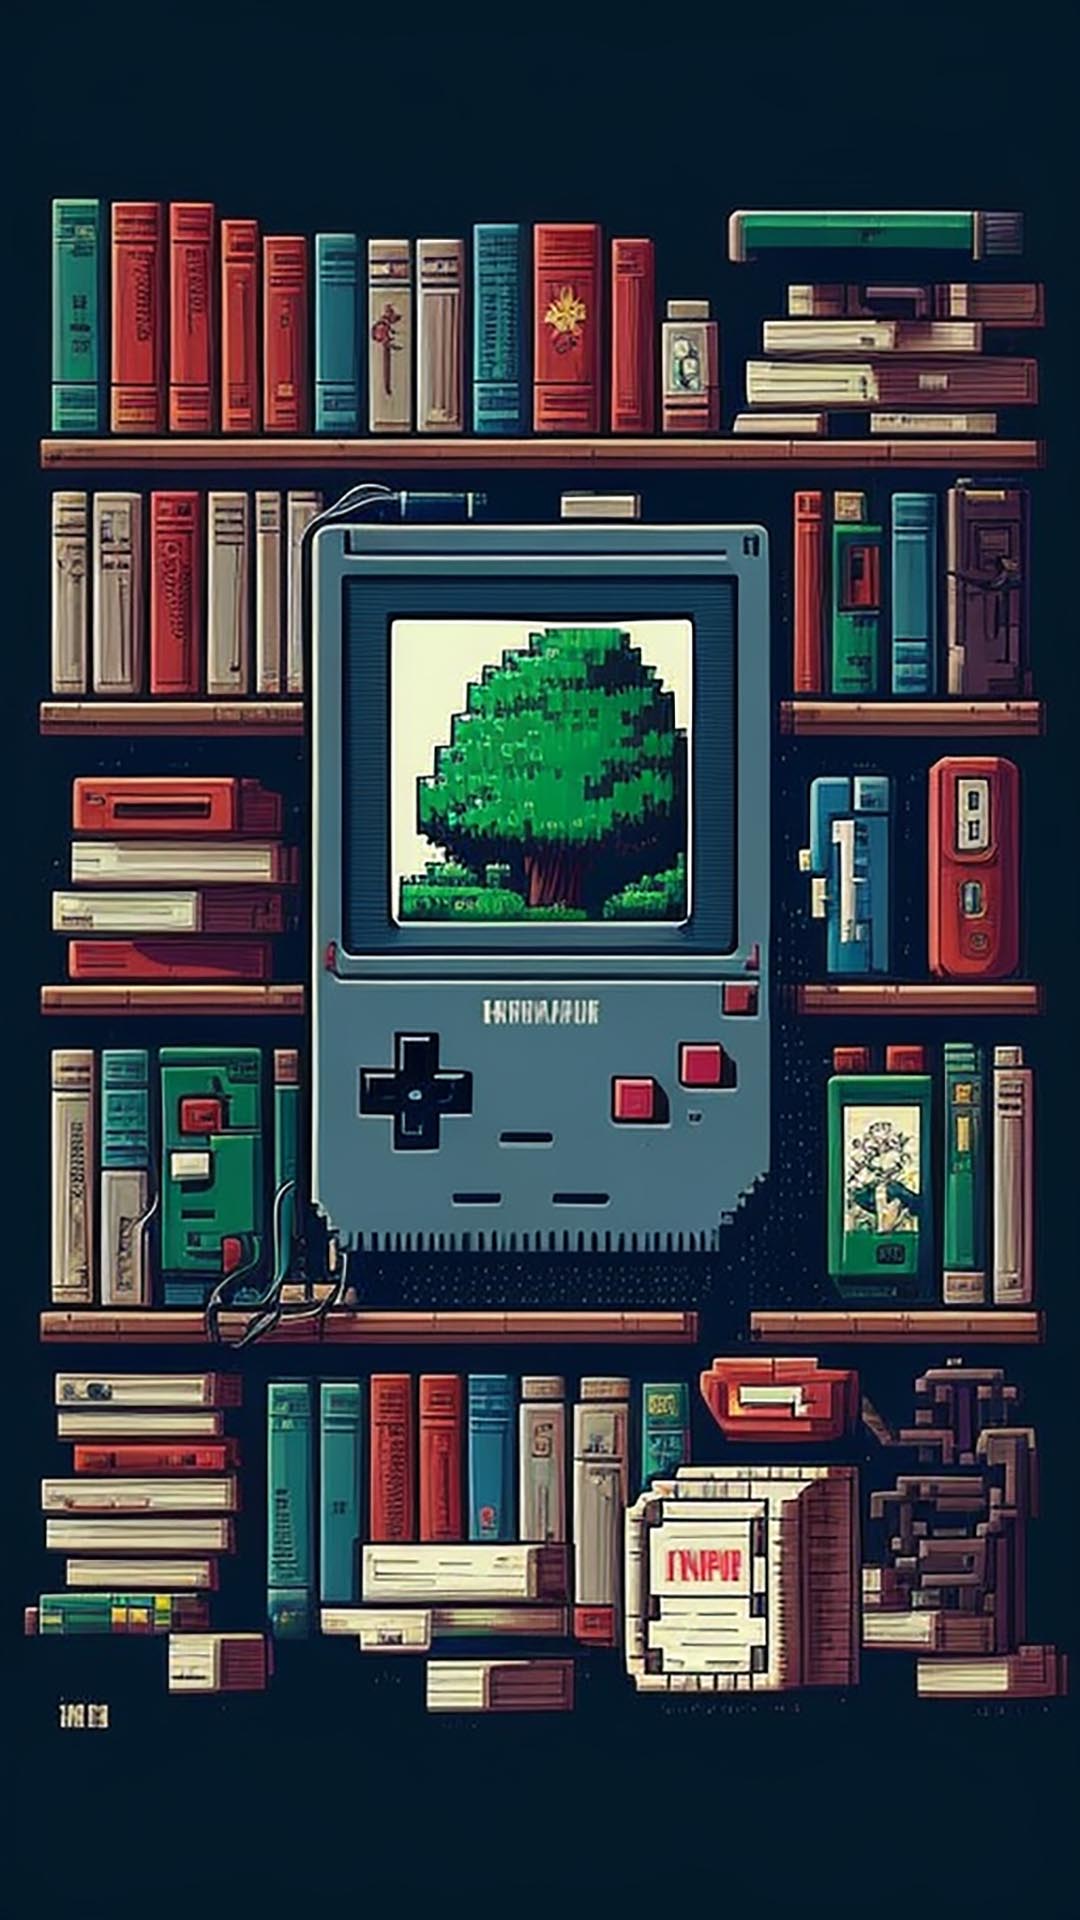 Retro GameBoy pixel art and bookshelf wallpaper